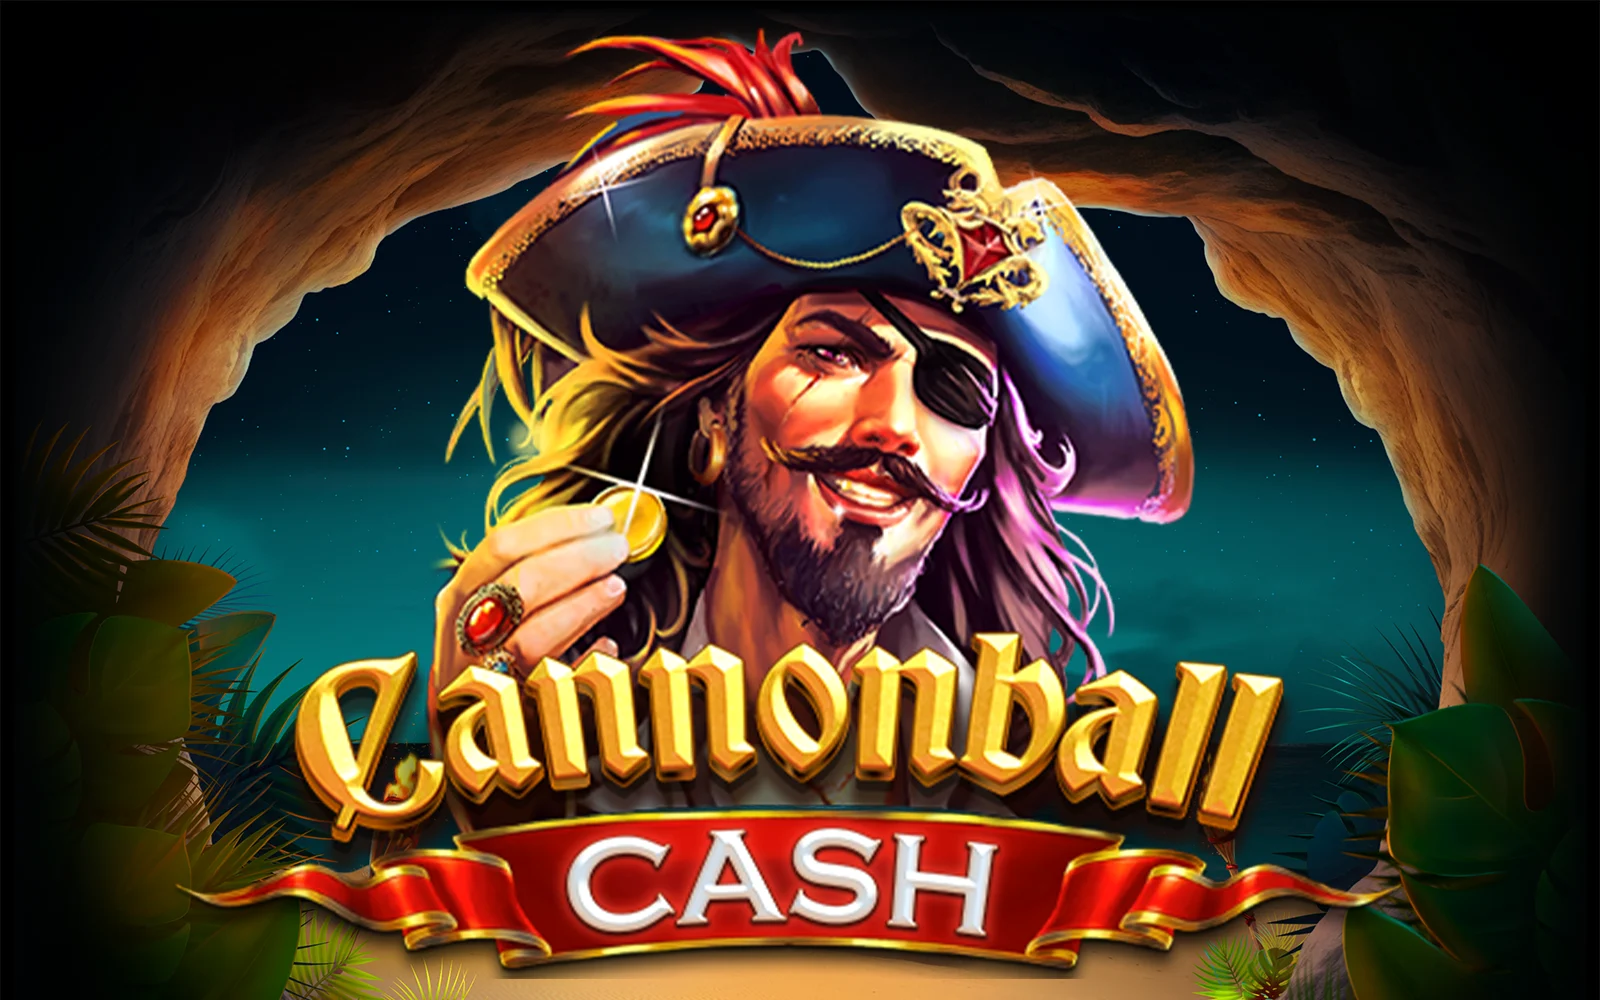 Грайте у Cannonball Cash в онлайн-казино Starcasino.be